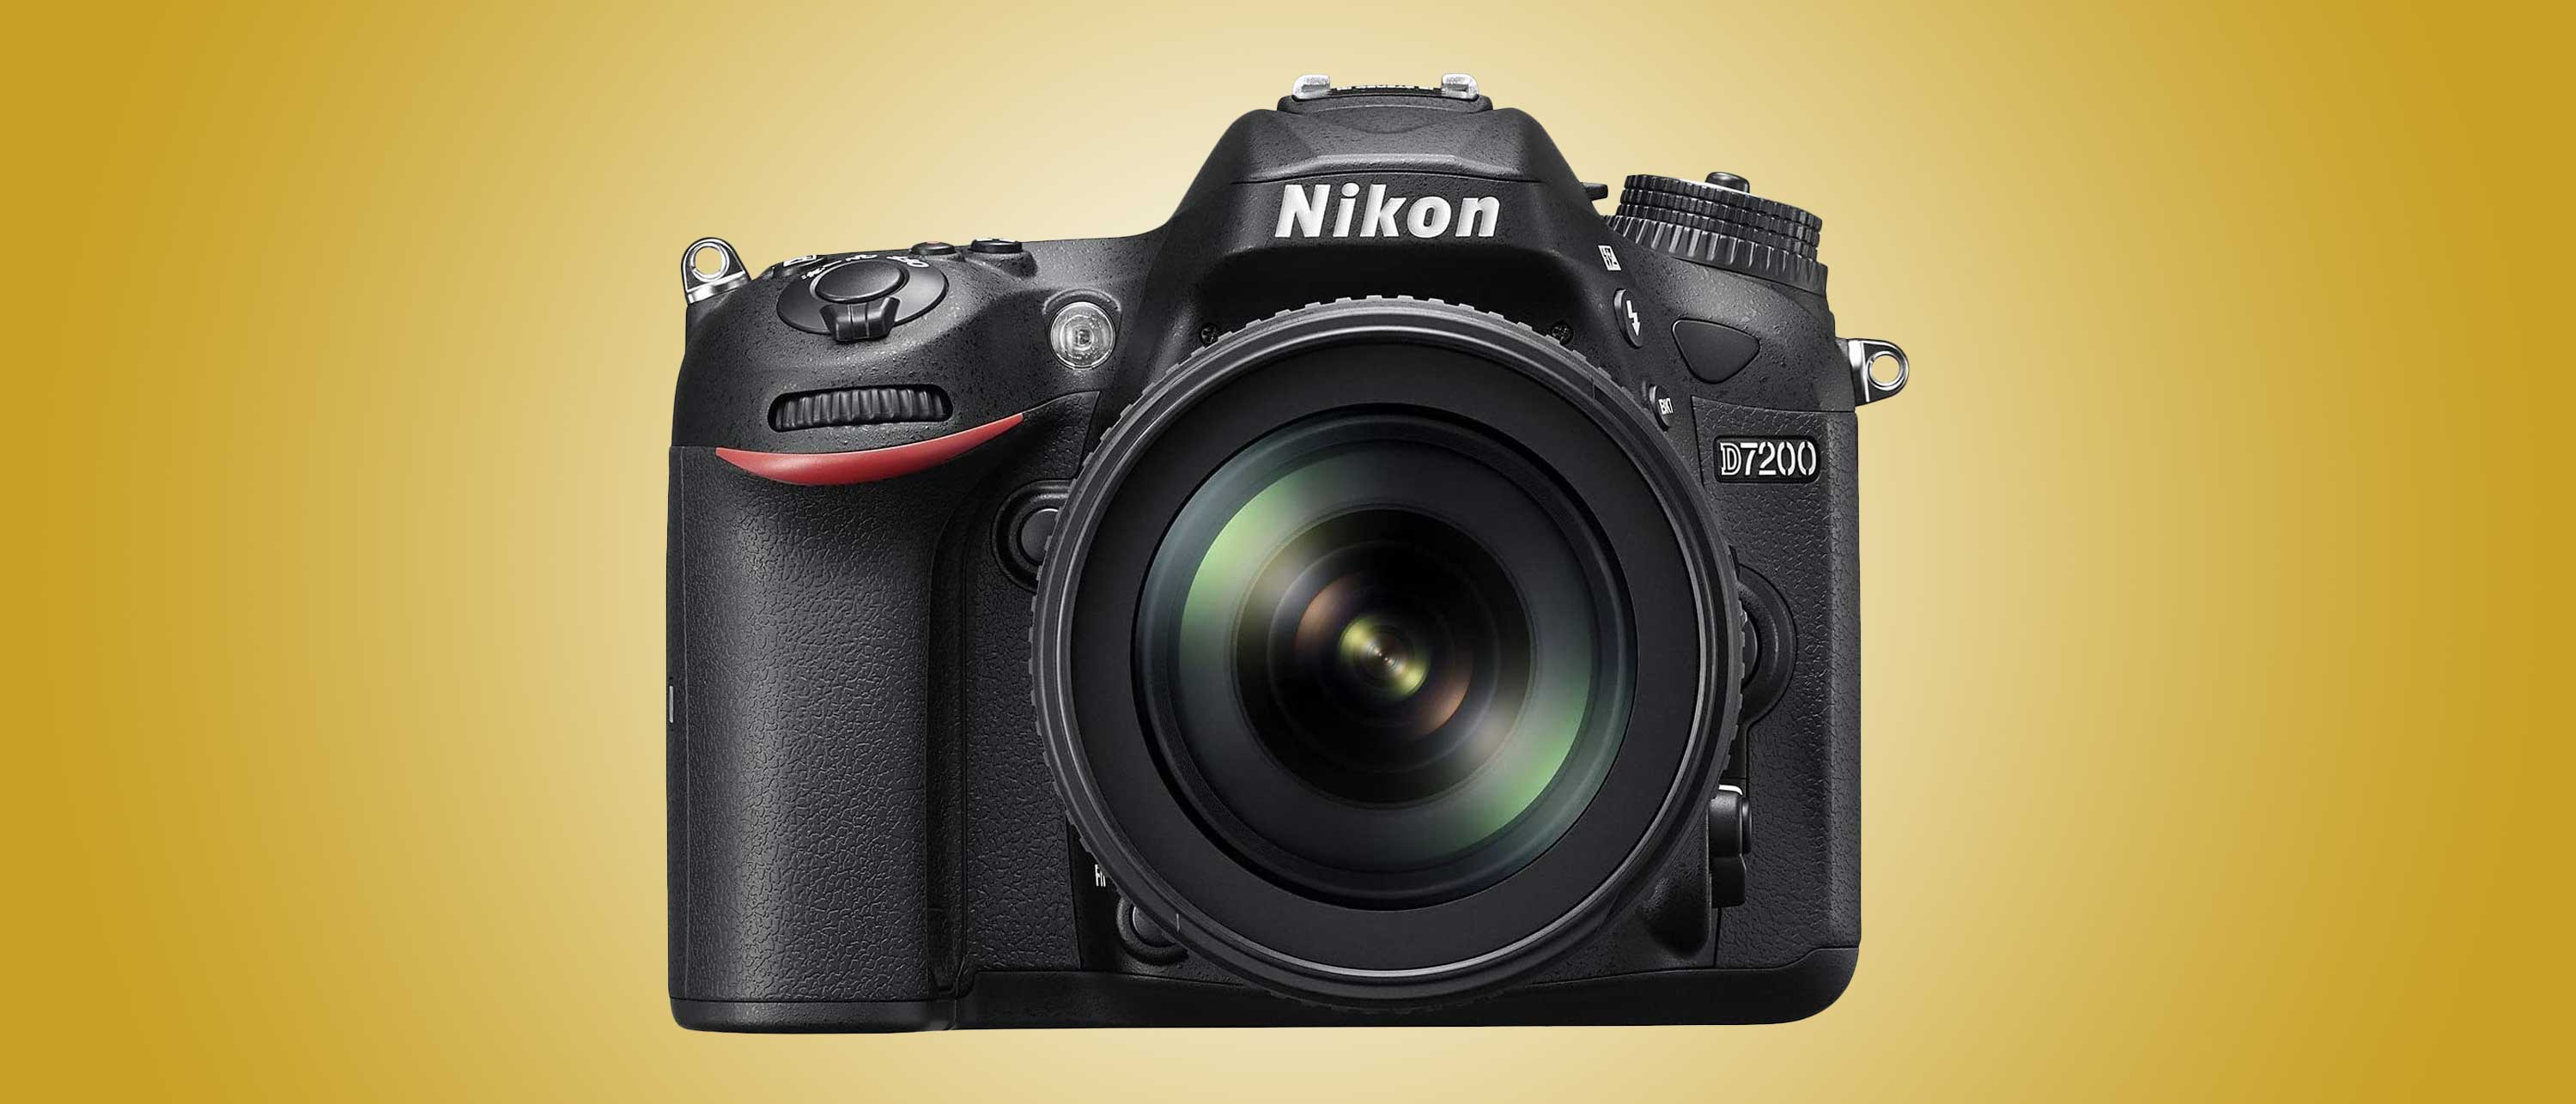 Video: Nikon D500 DSLR Camera Video Review